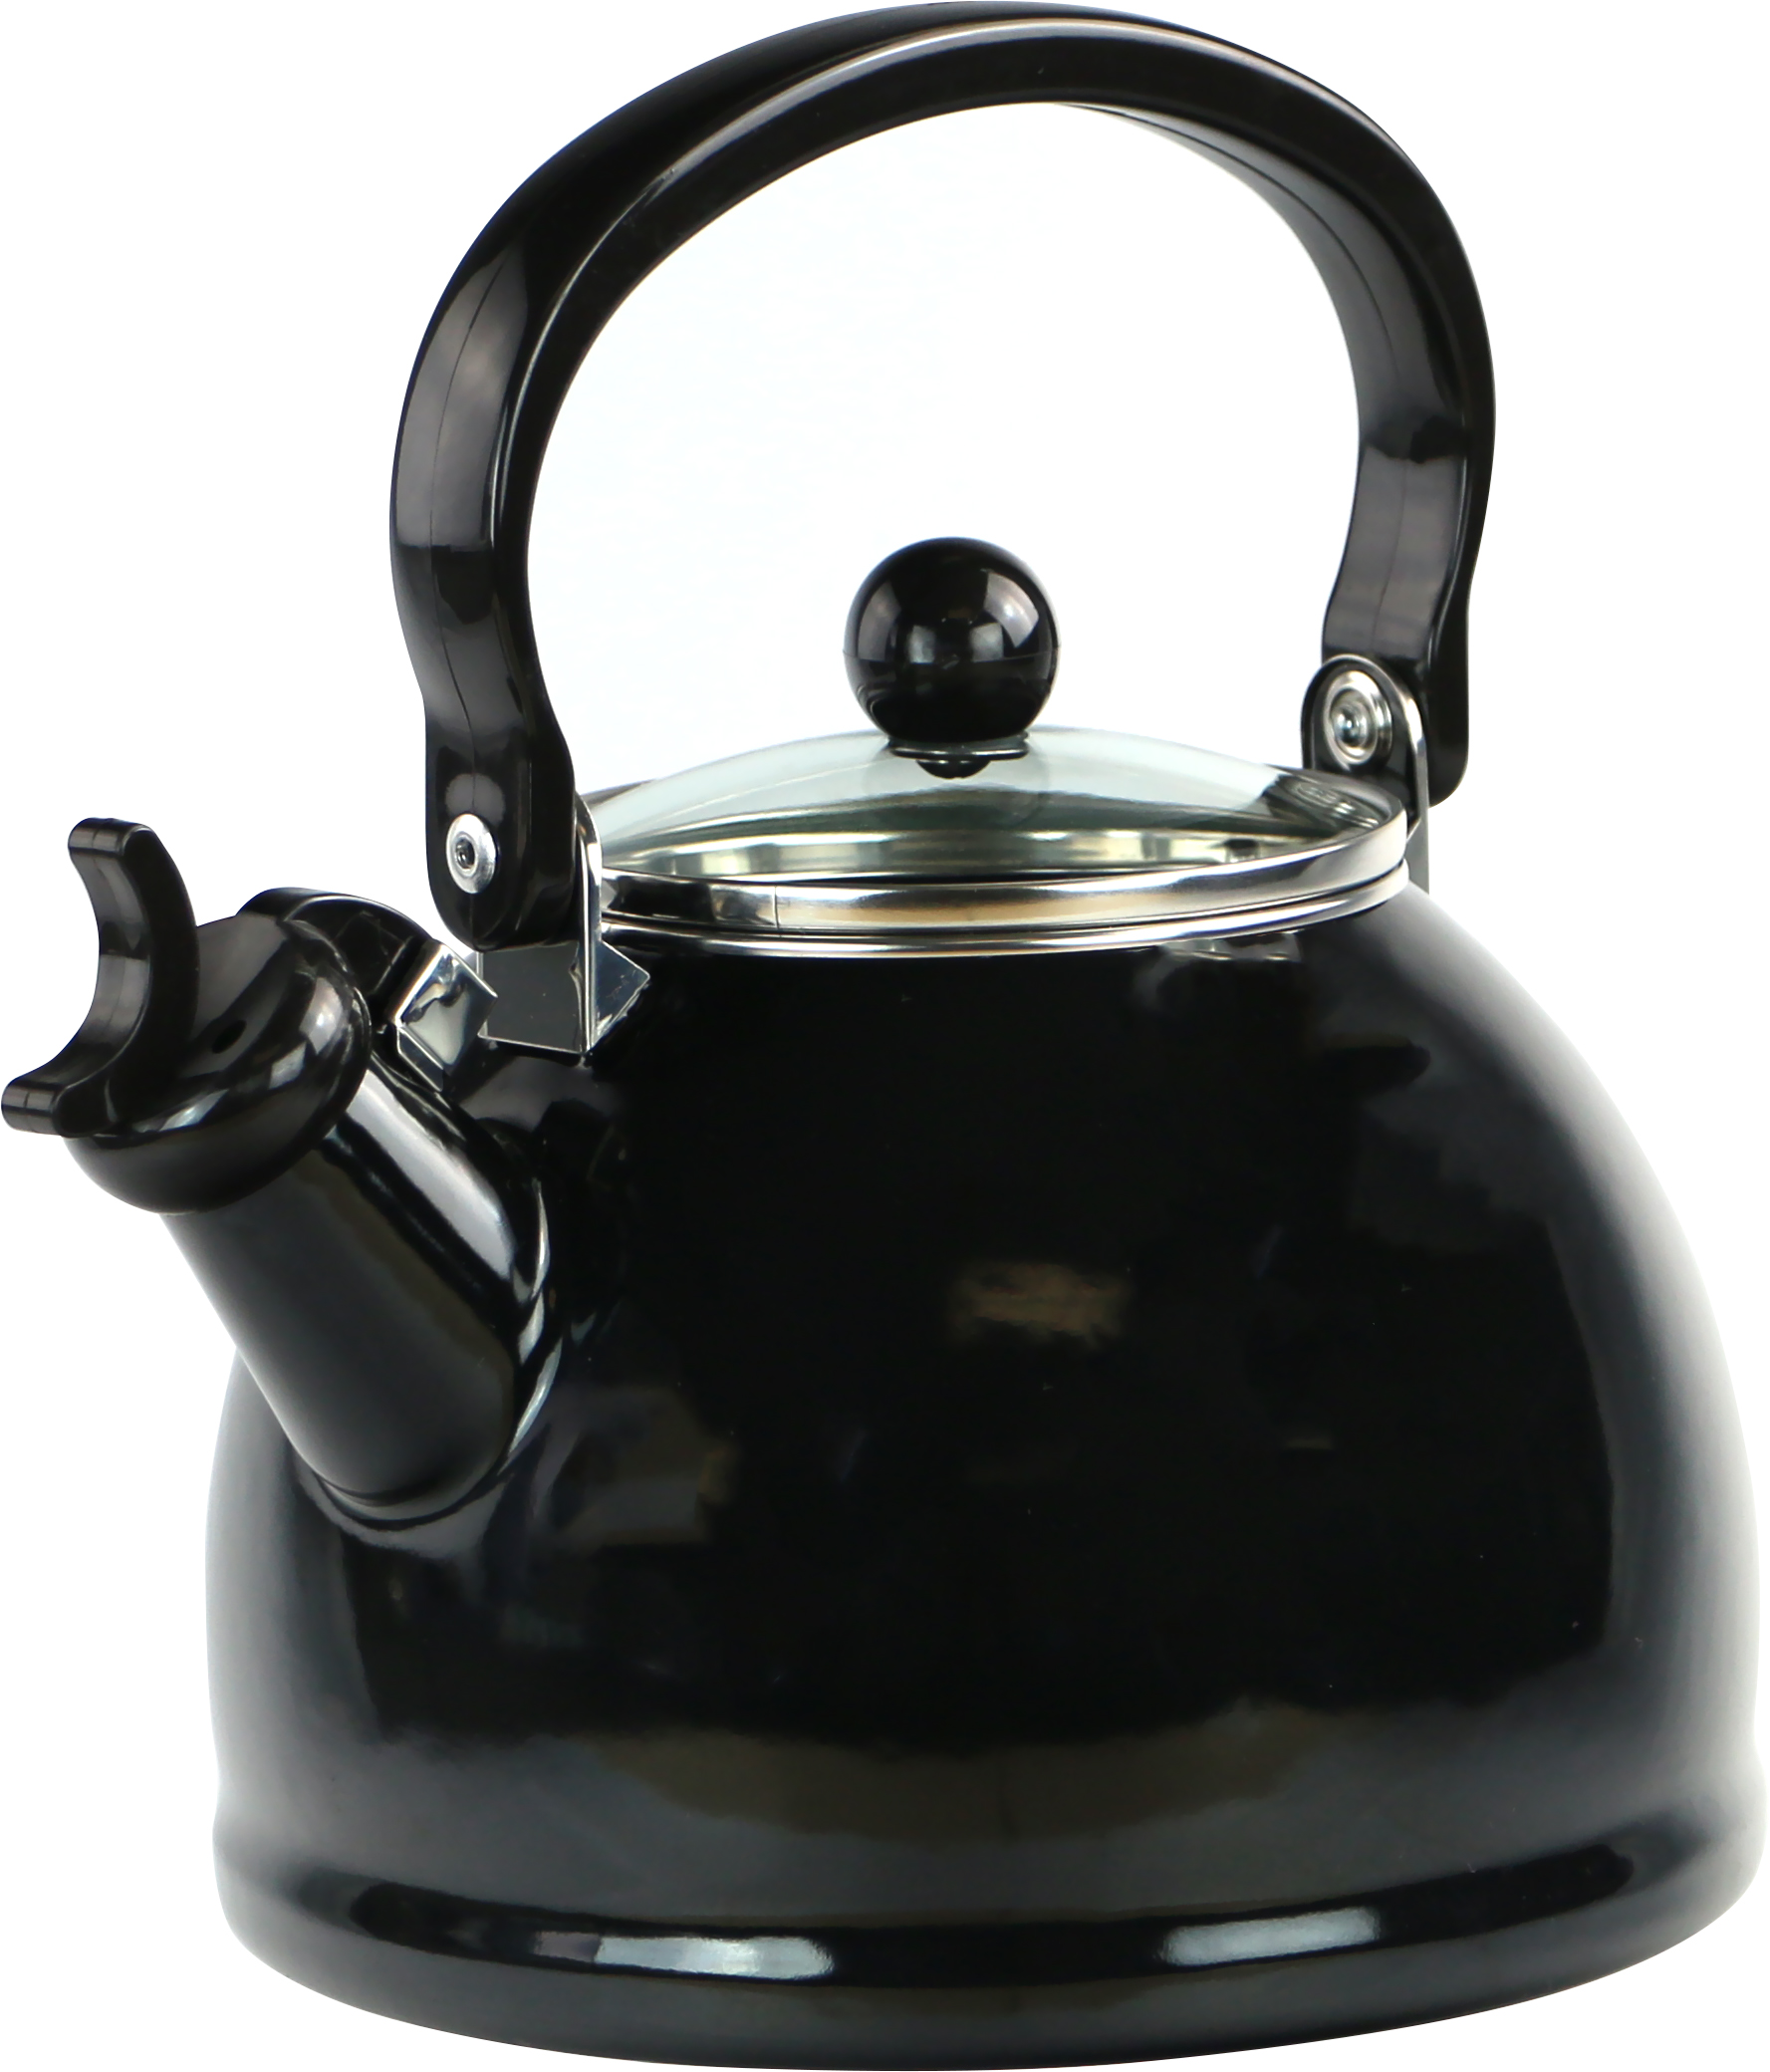 Reston Lloyd 2.5qt Black Whistling Tea Kettle - image 1 of 6